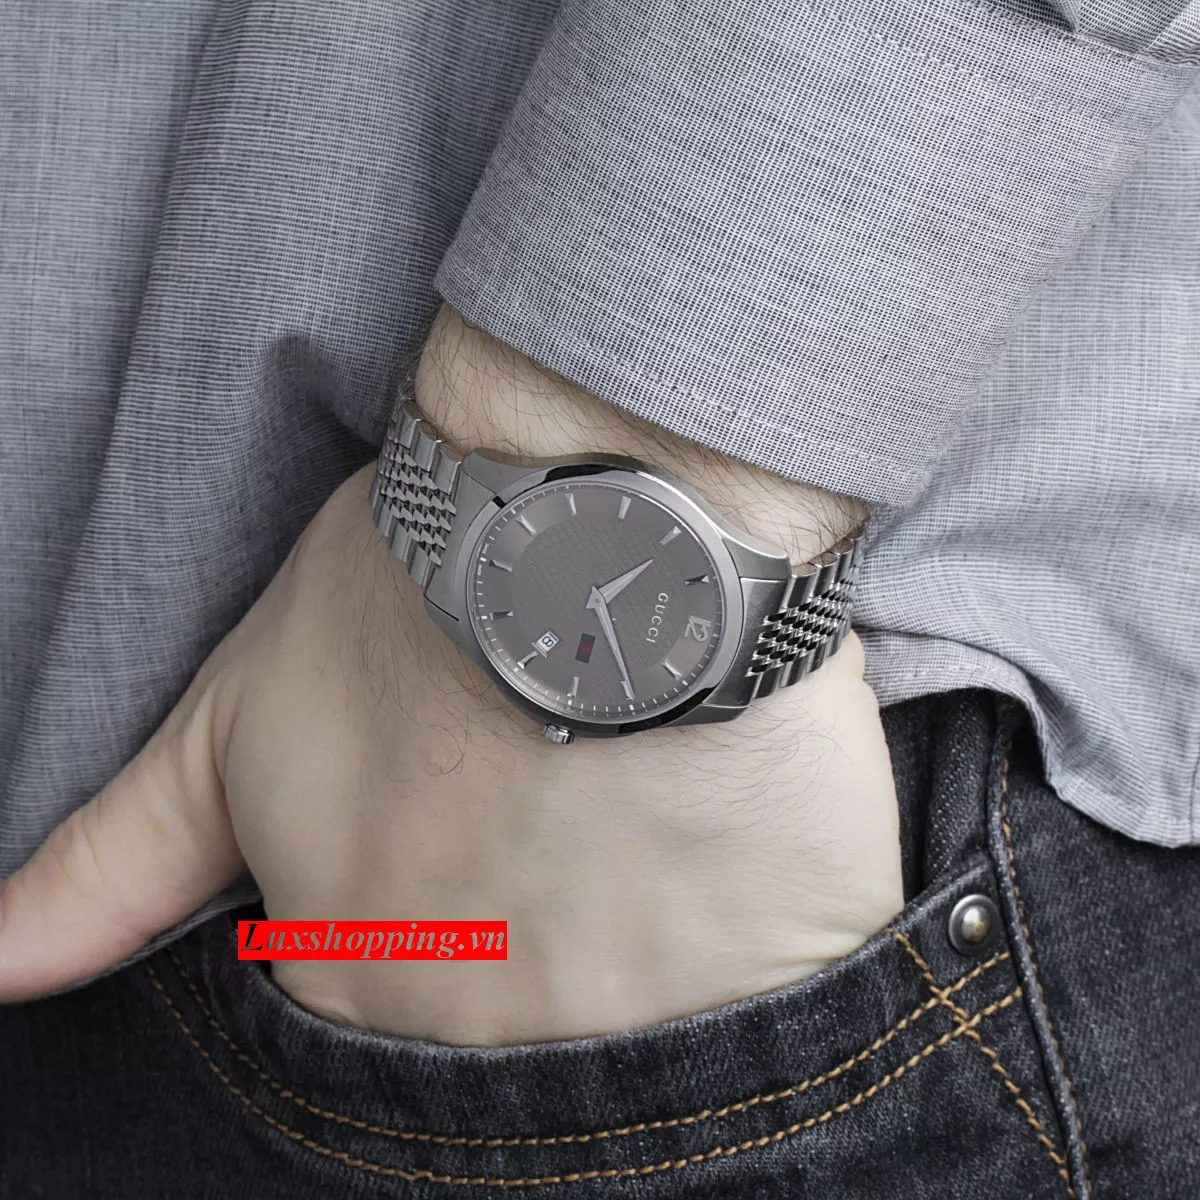 Gucci G-Timeless Watch 40mm 